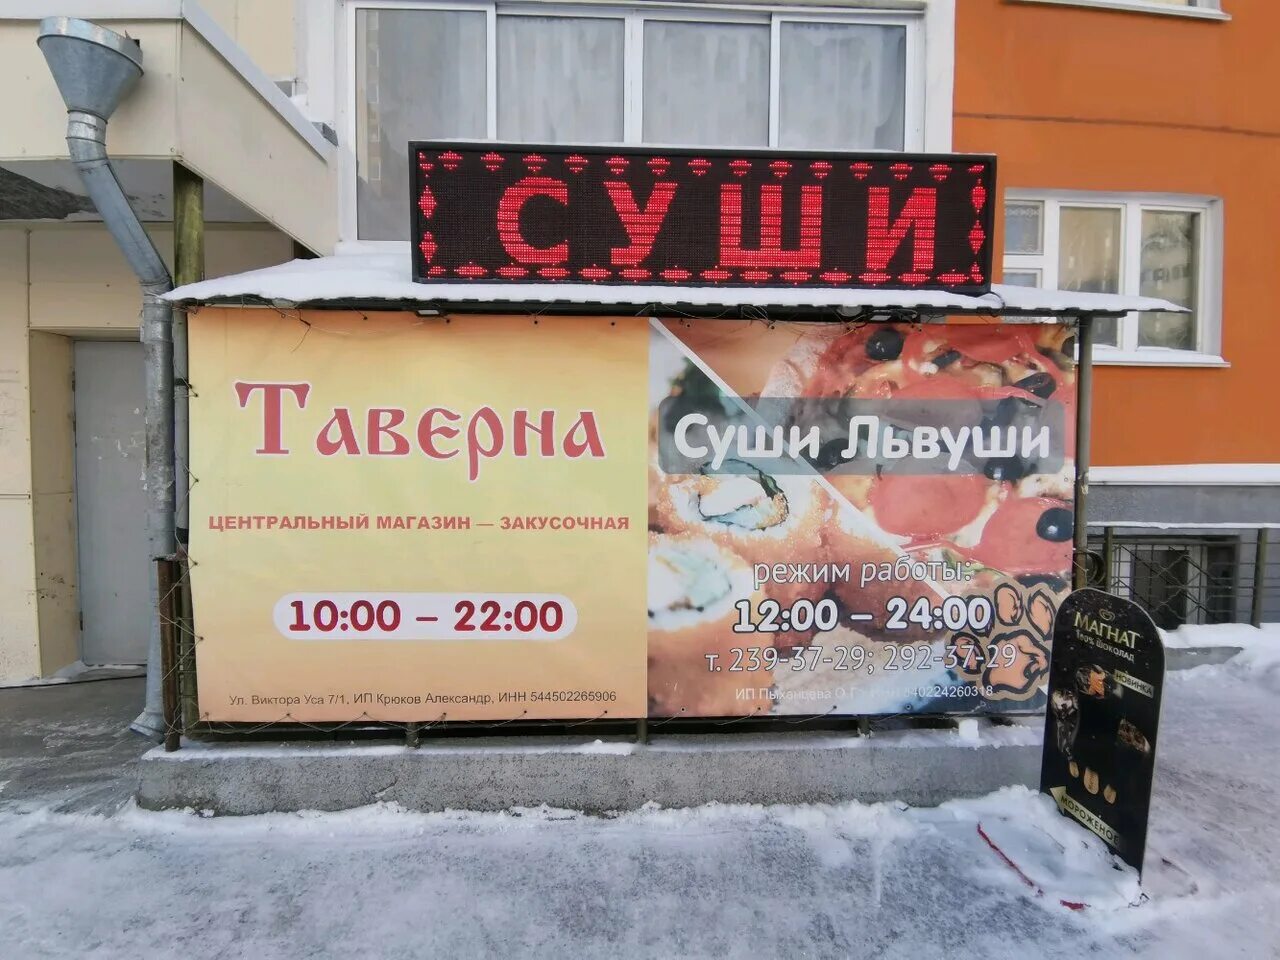 Таверна в Новосибирске. Суши Виктора Уса 11. Магазин таверна режим раб.